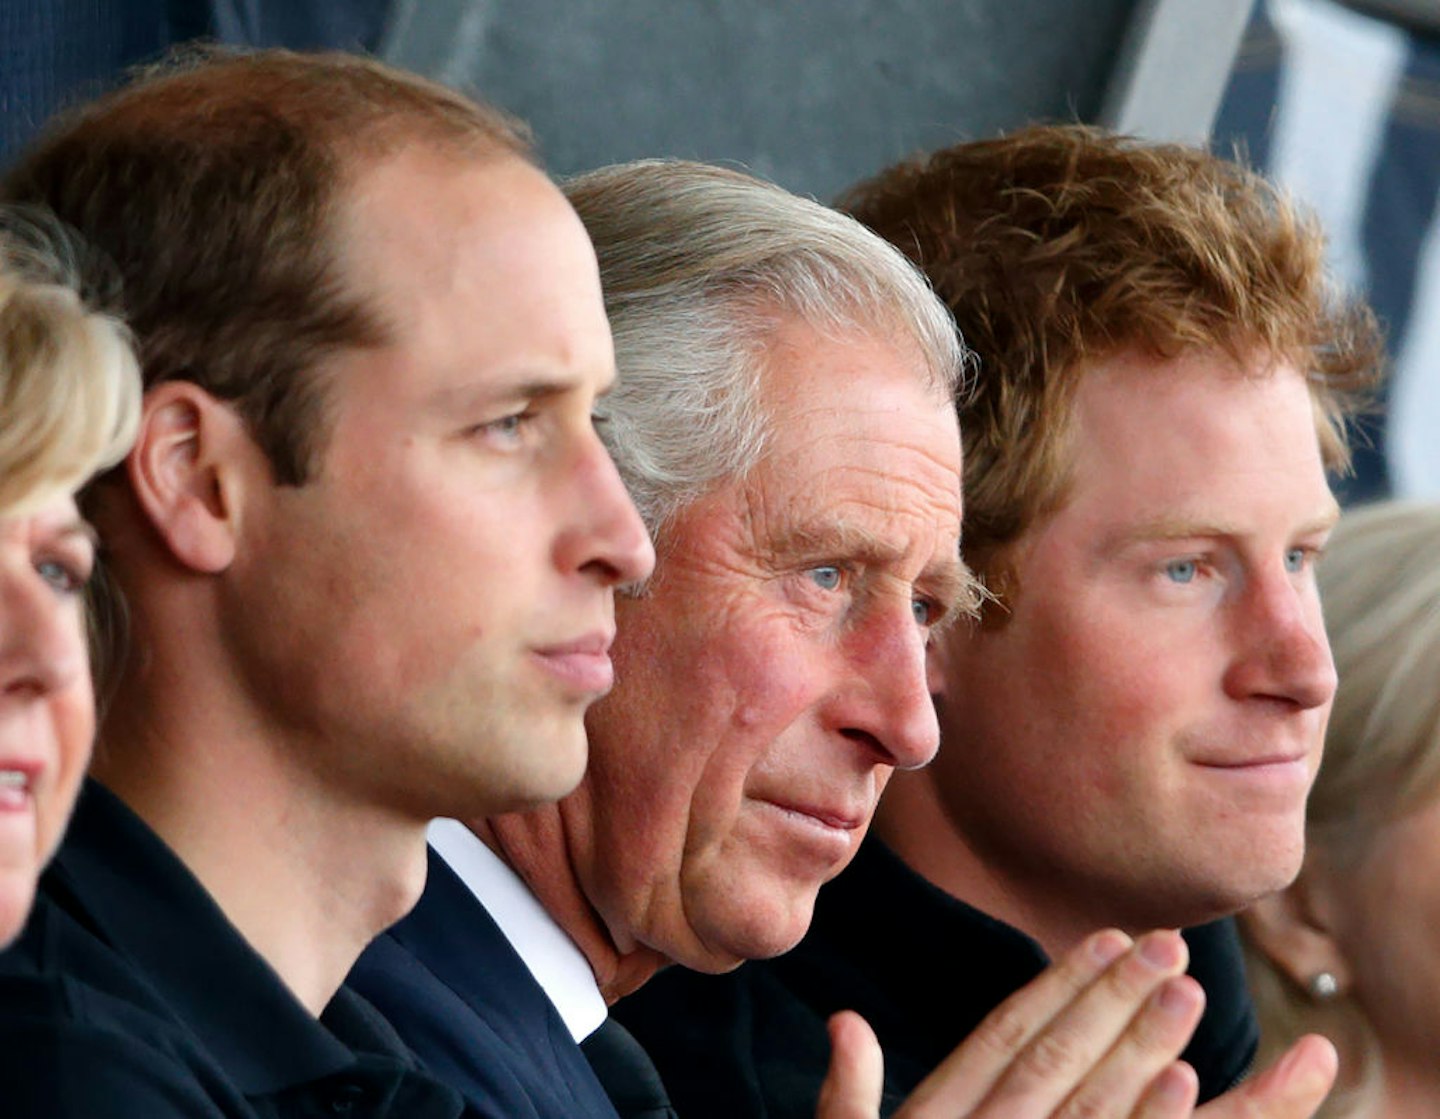 King Charles III, Prince William and Prince Harry